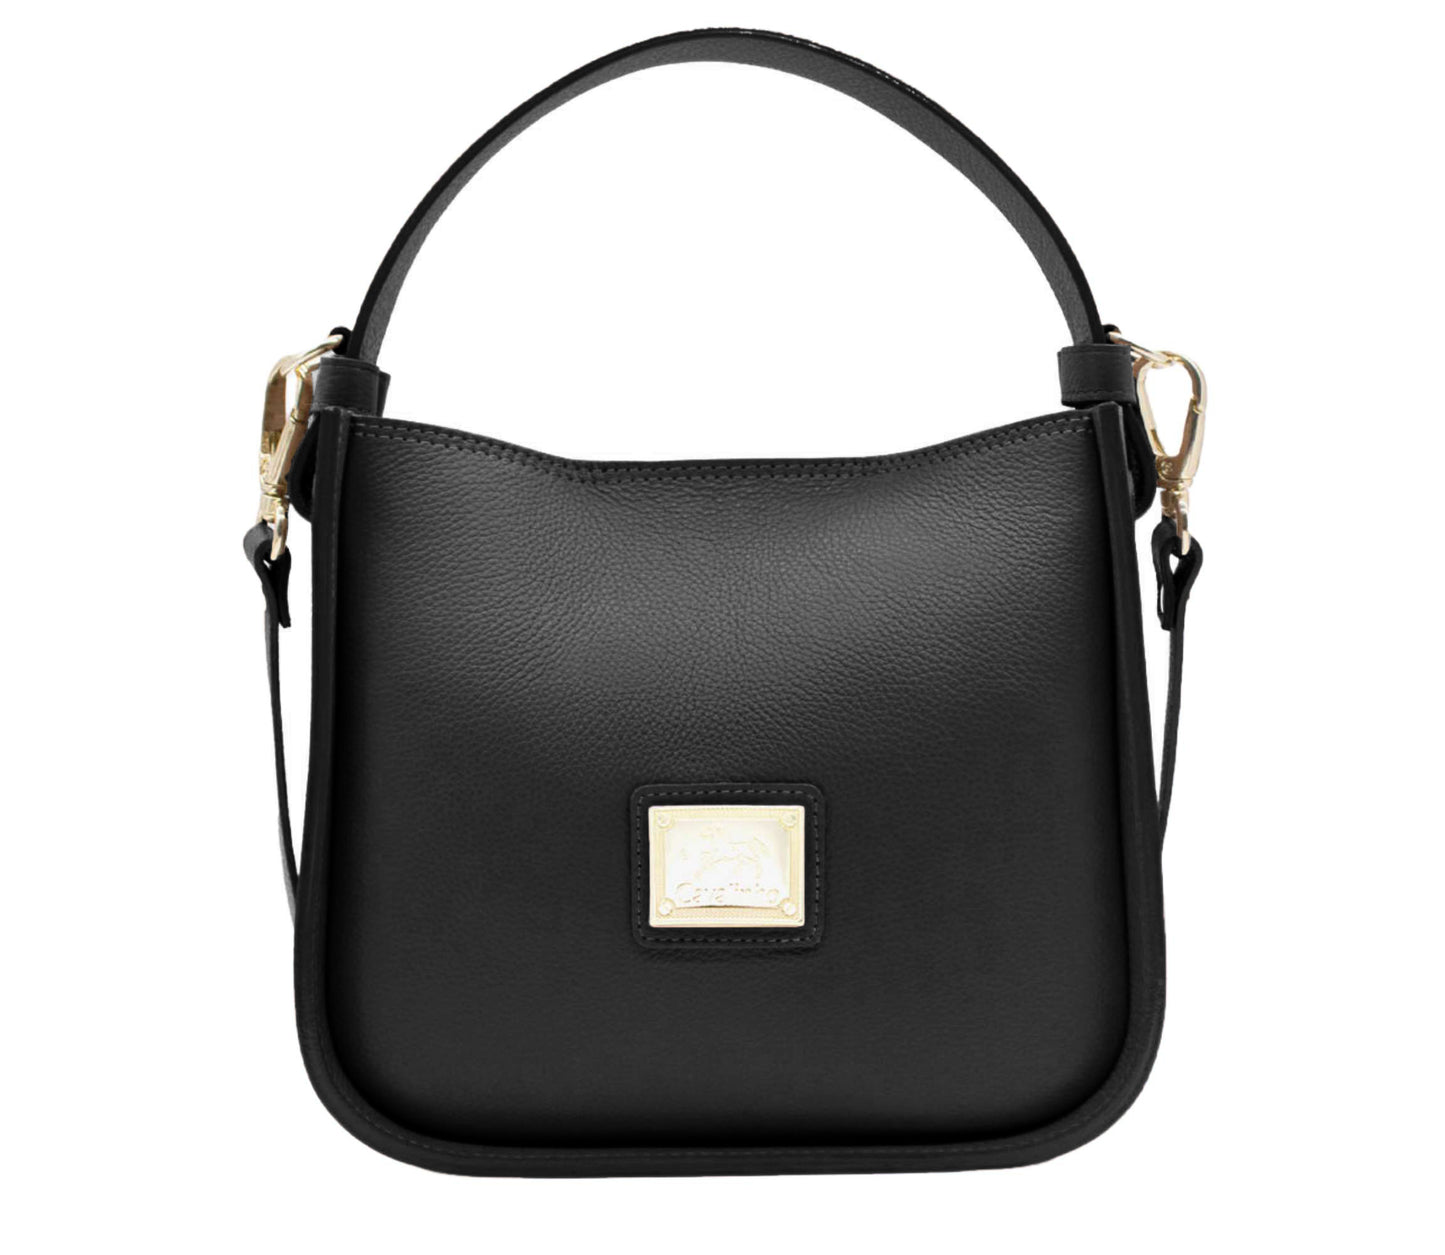 Cavalinho Muse Leather Handbag - Black - 18300475.01.99